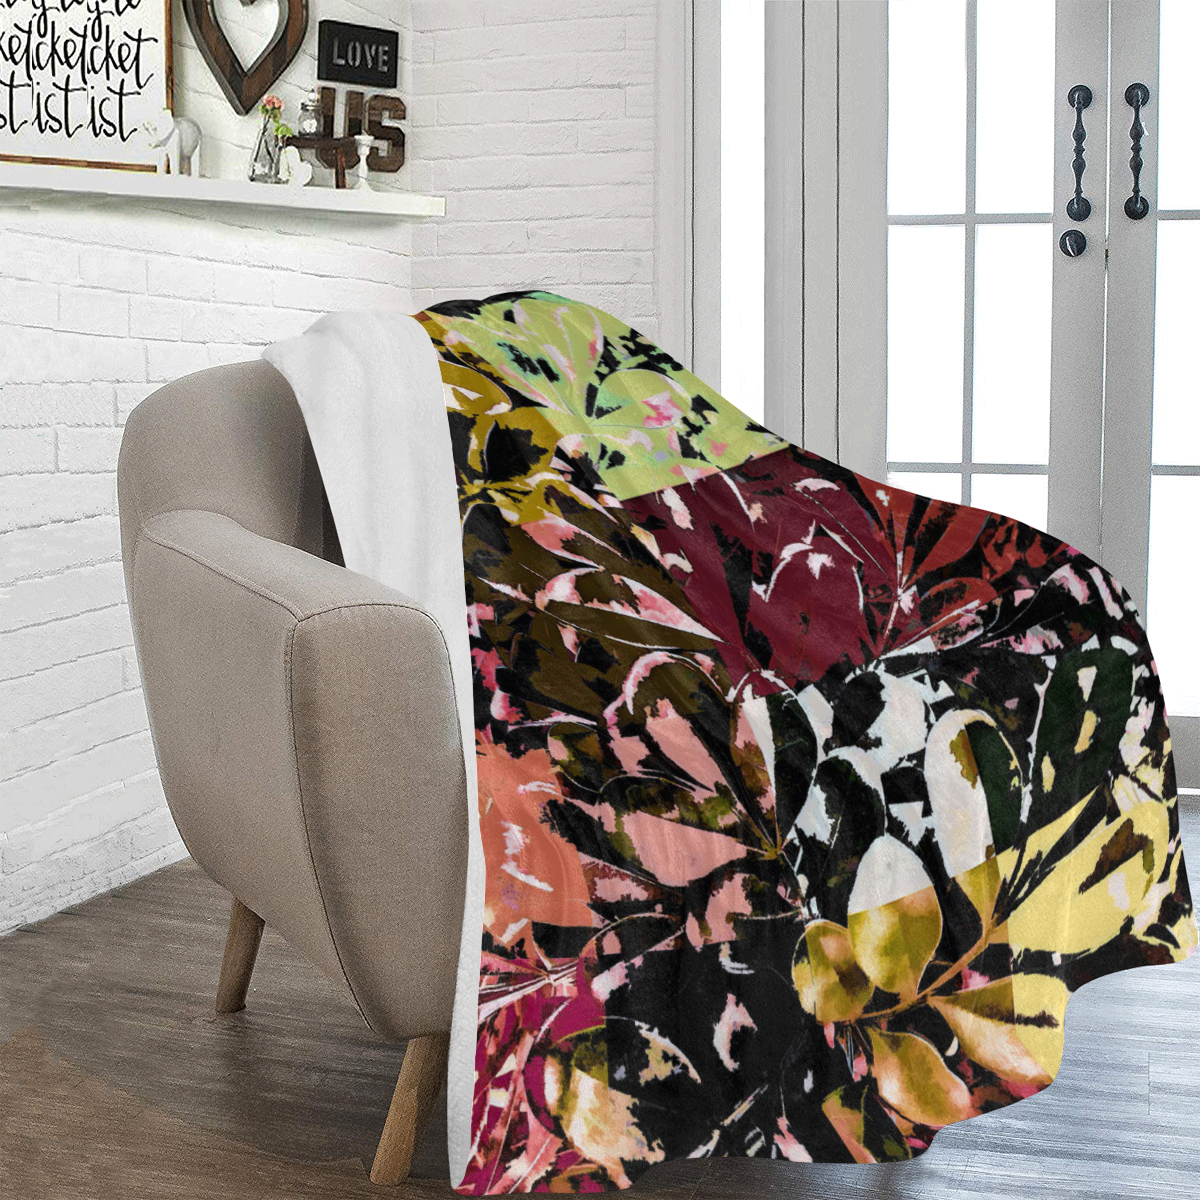 Foliage Patchwork #6A - Jera Nour Ultra-Soft Micro Fleece Blanket 60"x80"